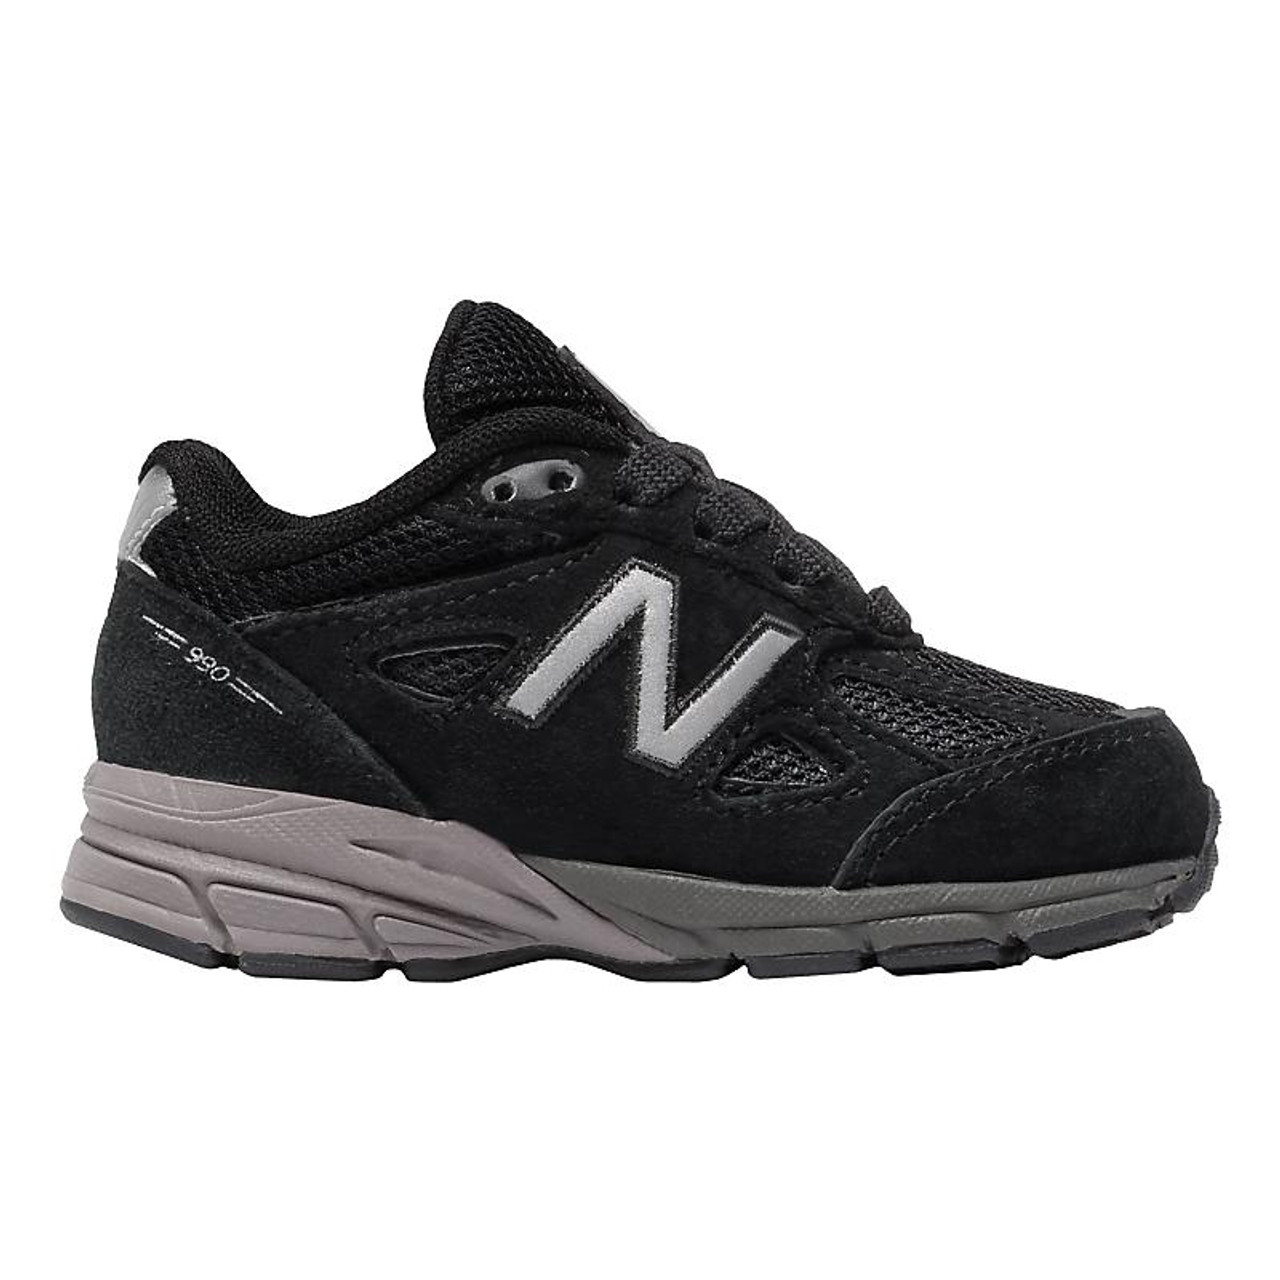 New Balance 990v4 Running Shoe | Free 3 